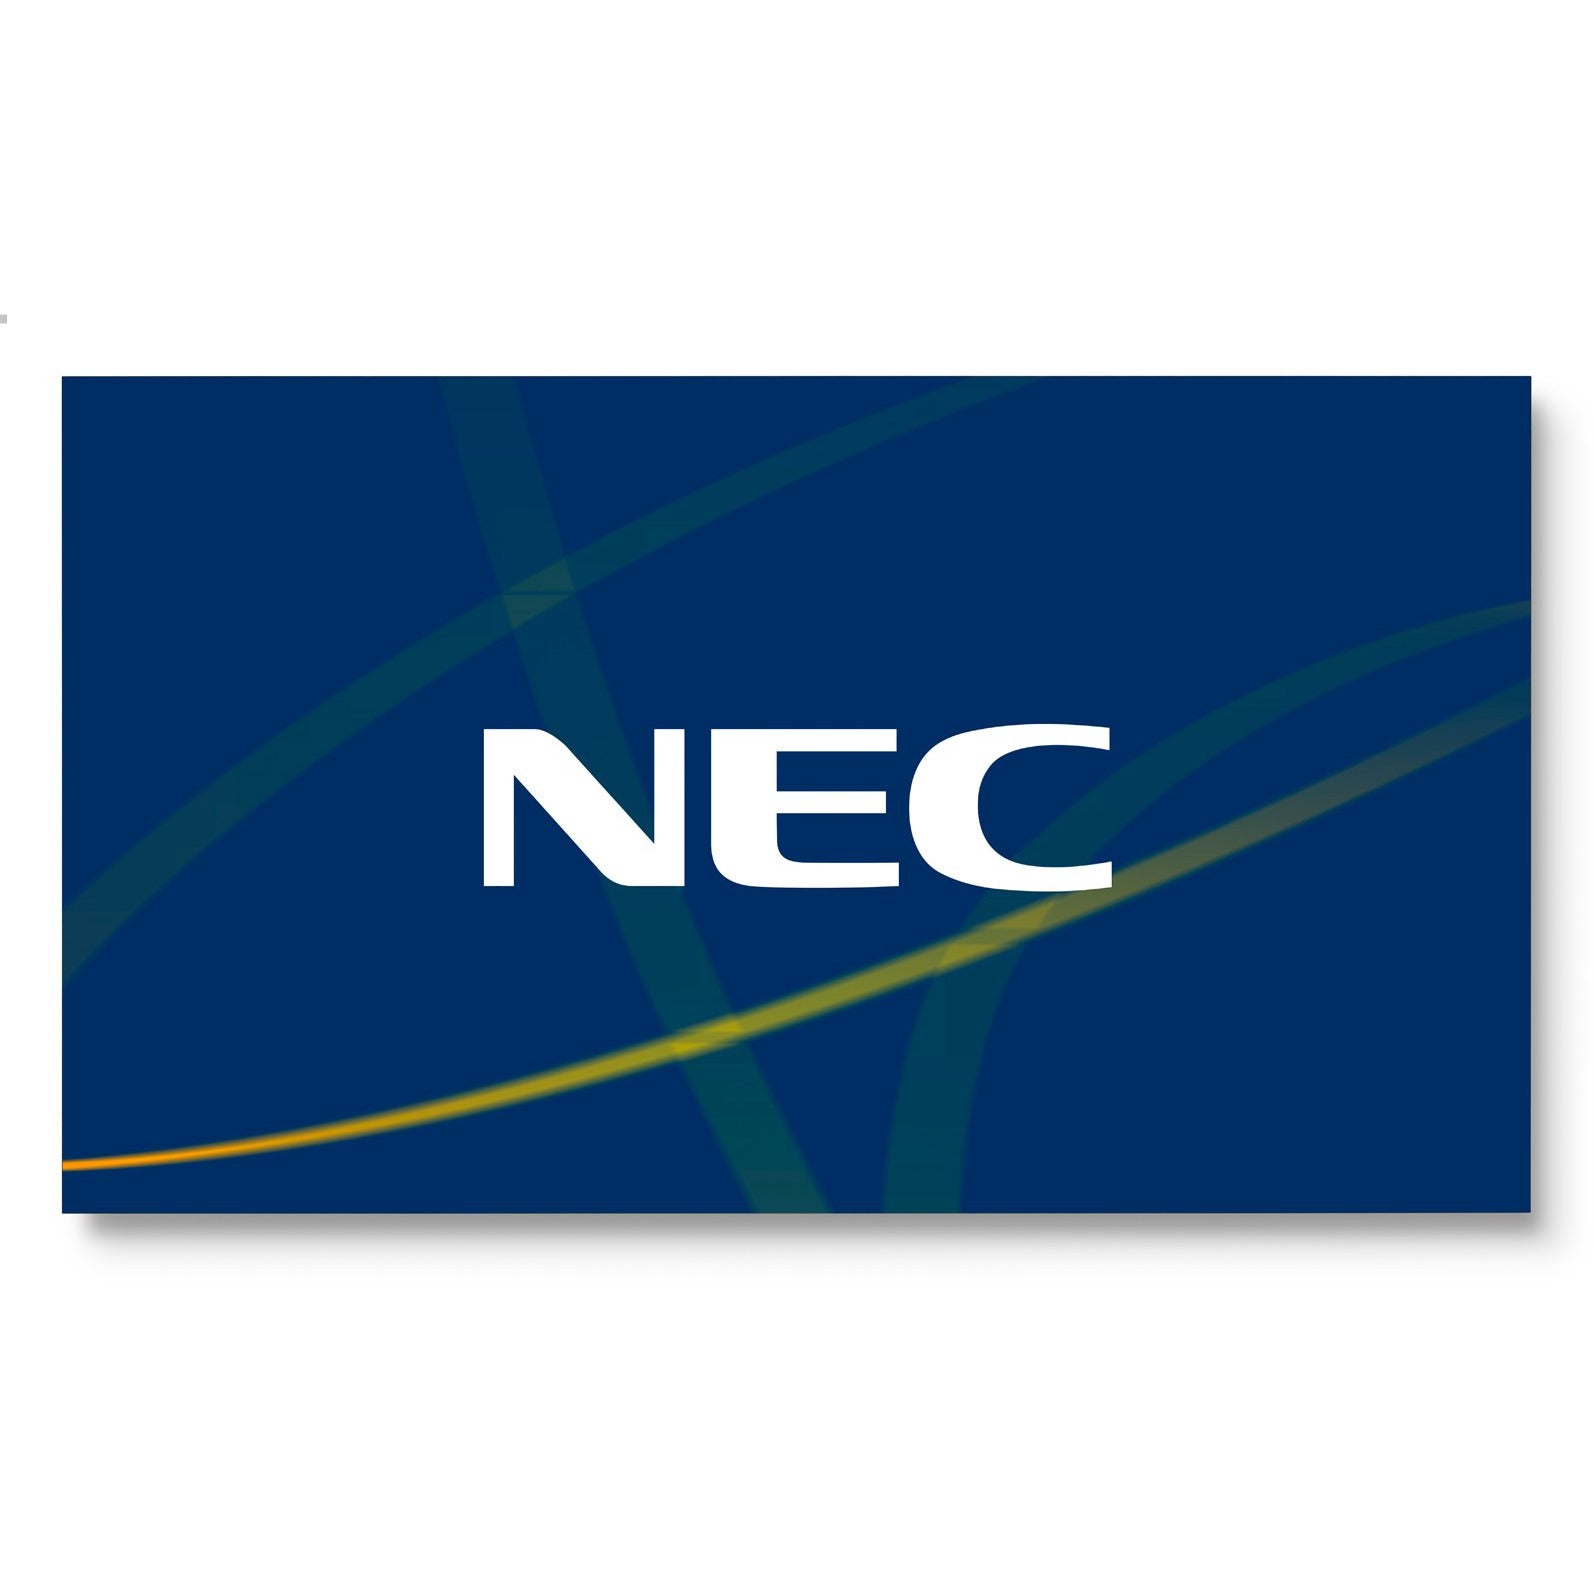 NEC MultiSync® UN552 LCD 55" Video Wall Display